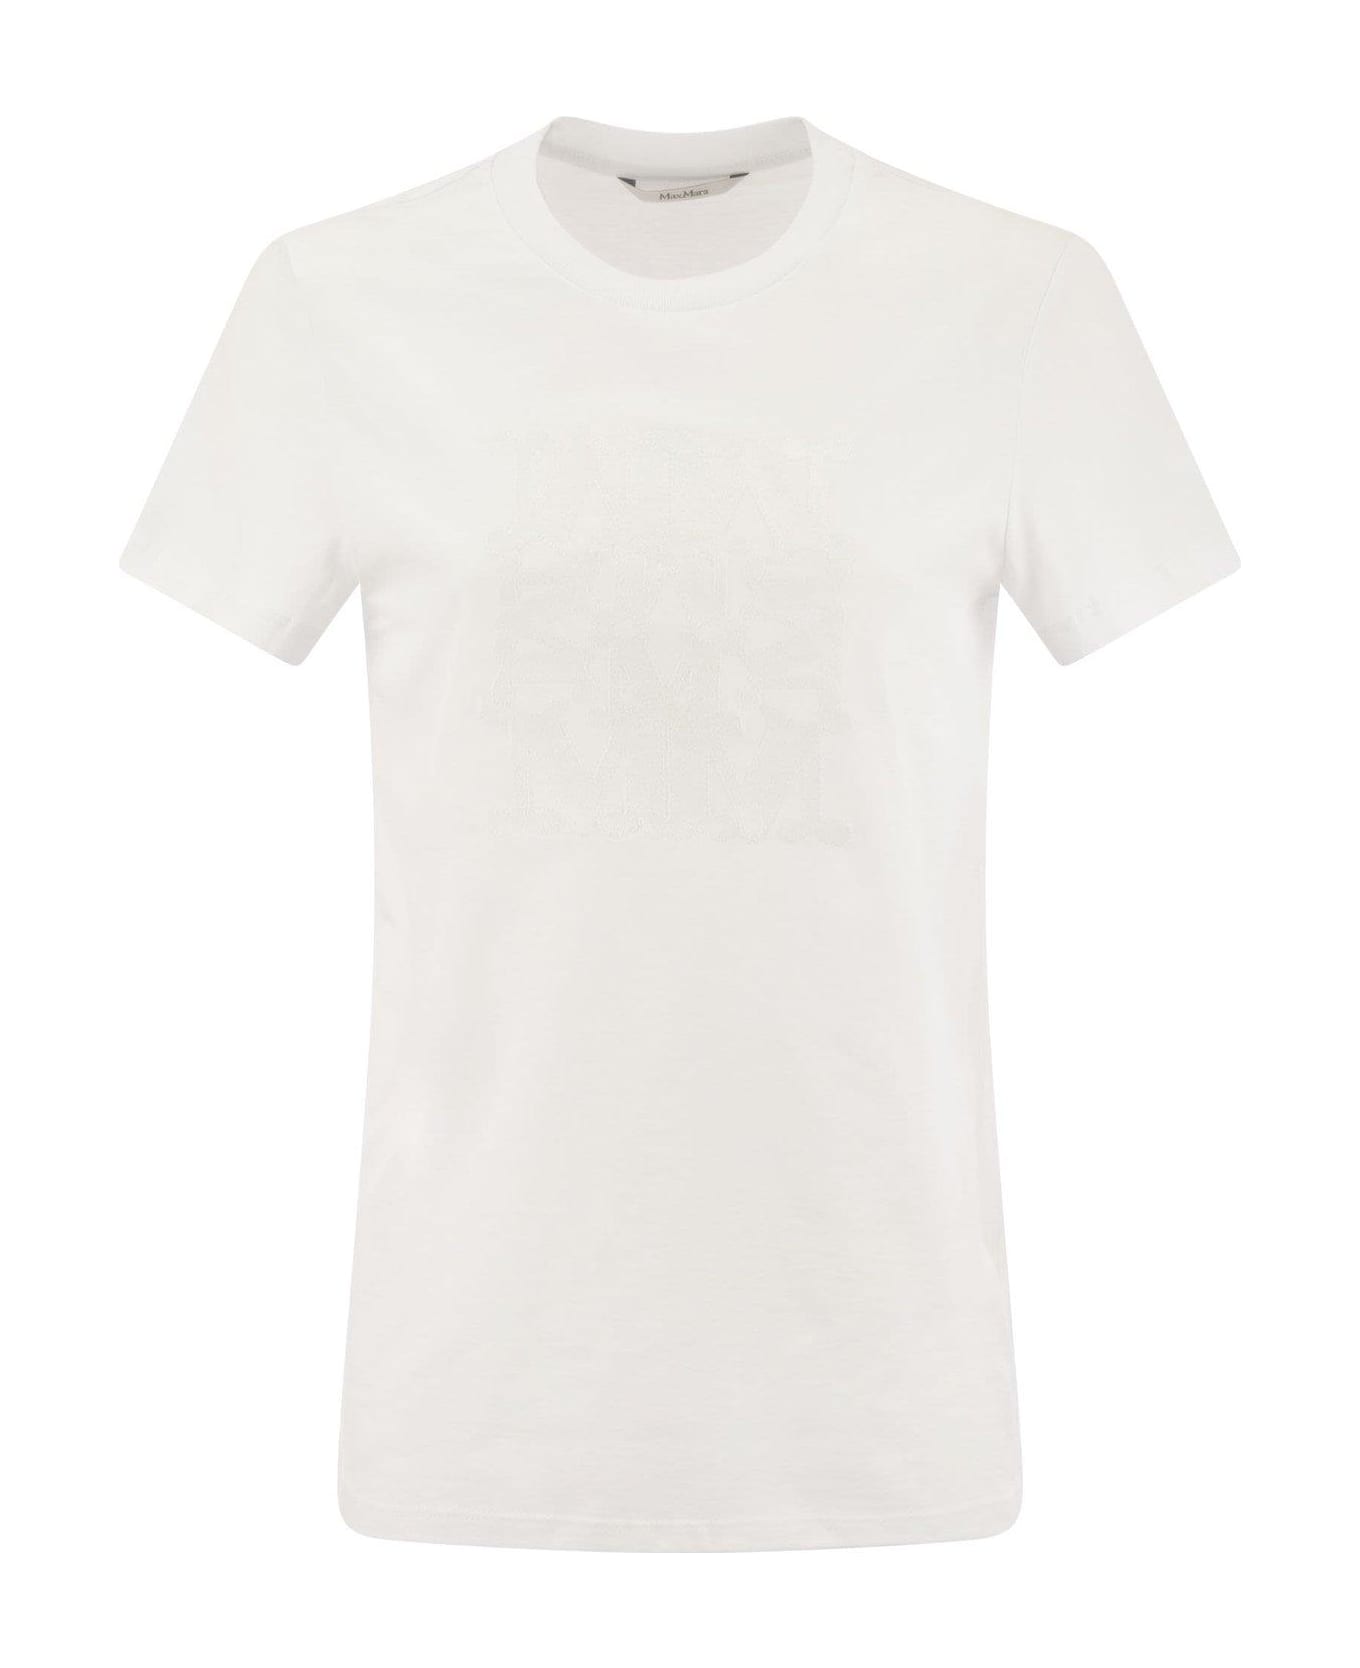 Max Mara Crewneck Short-sleeved T-shirt - White